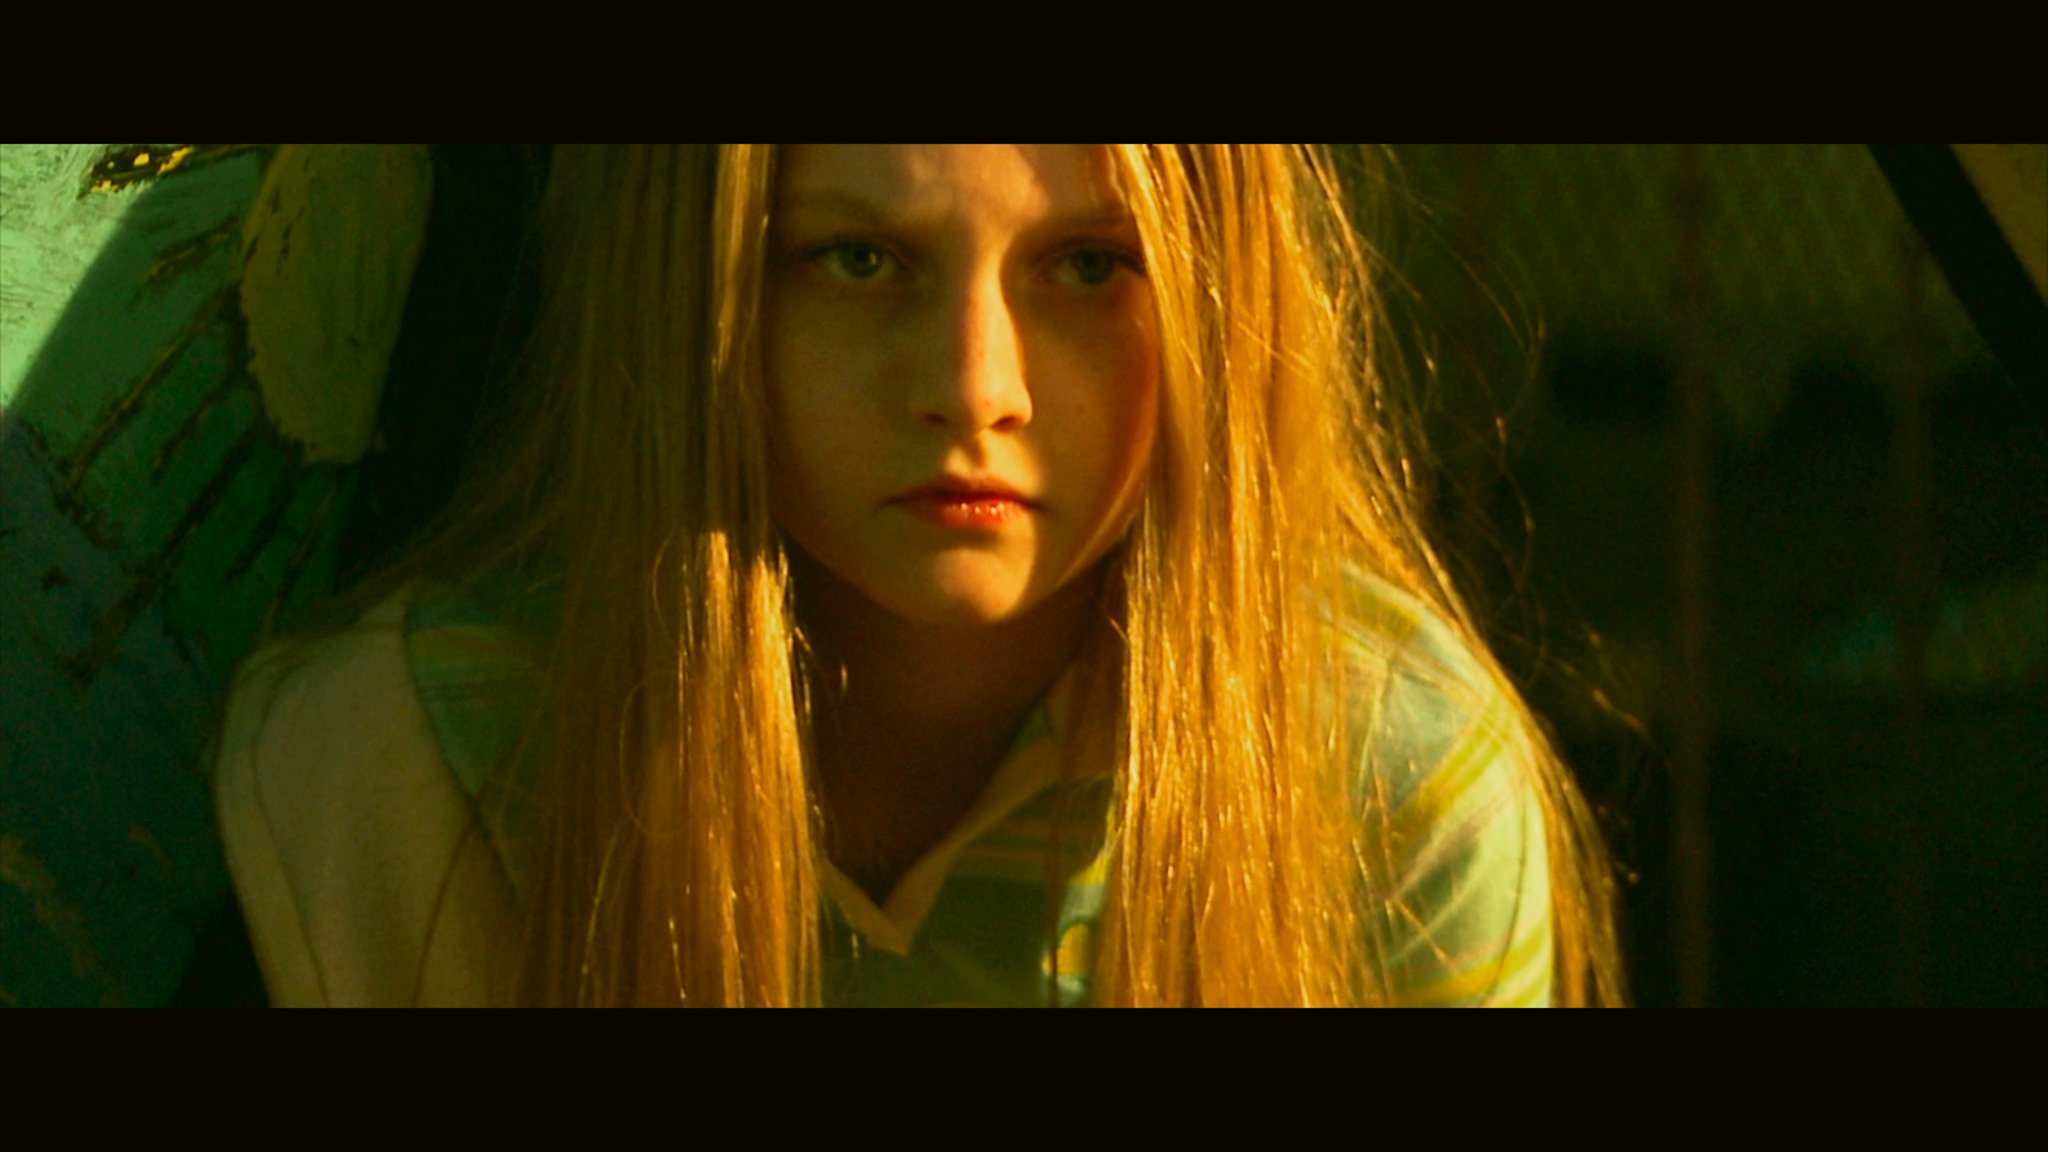 Ashley switzer in 'Ruby Slippers' (2011)